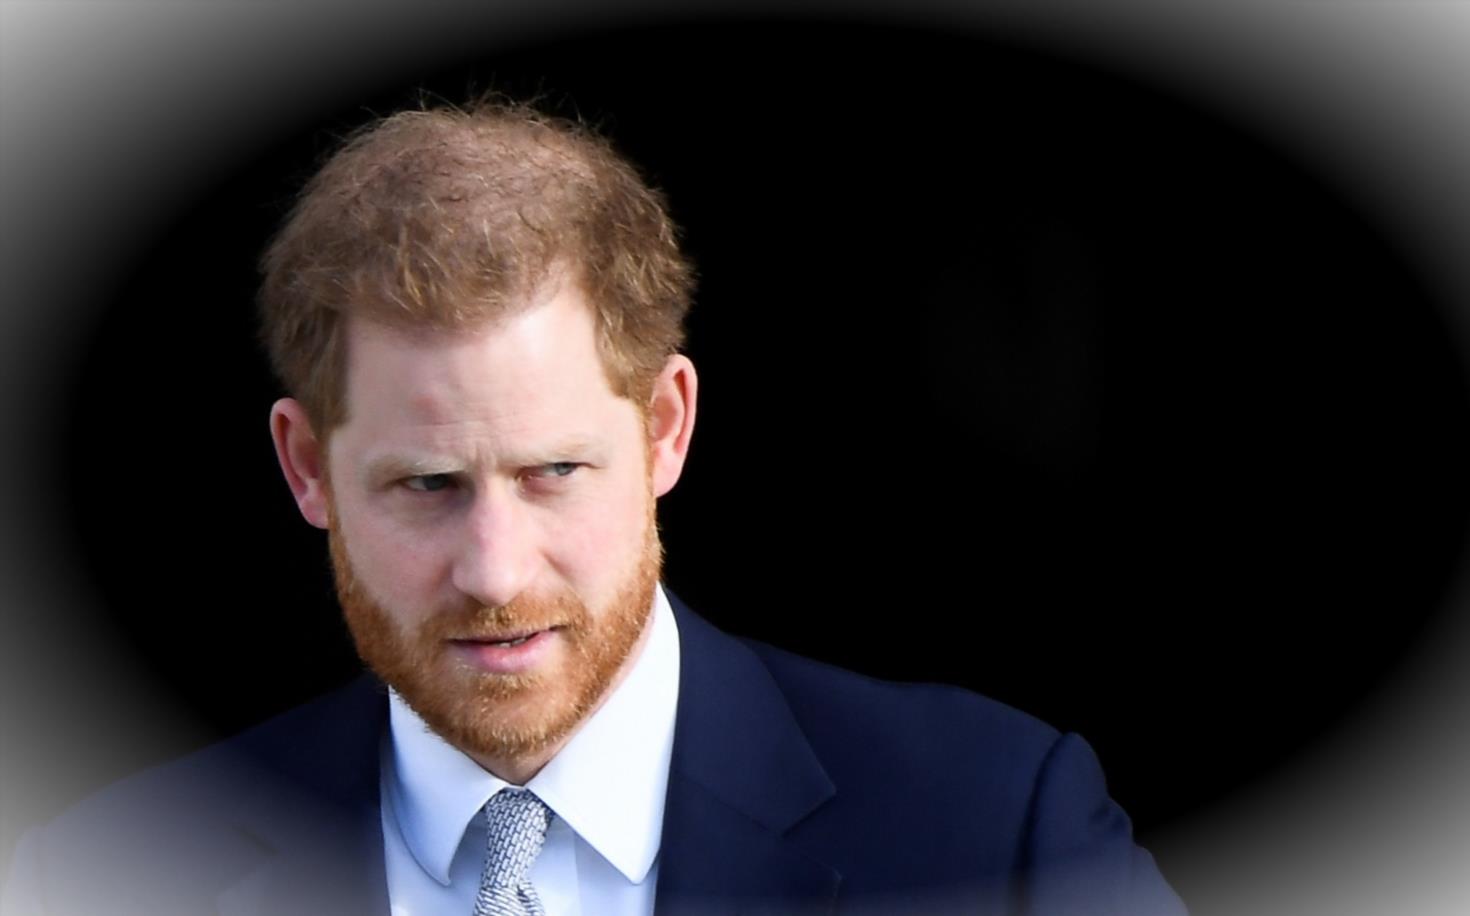 Prince Harrys Unexpected London Appearance Bolsters CoronationgcO6P5Ftr 1